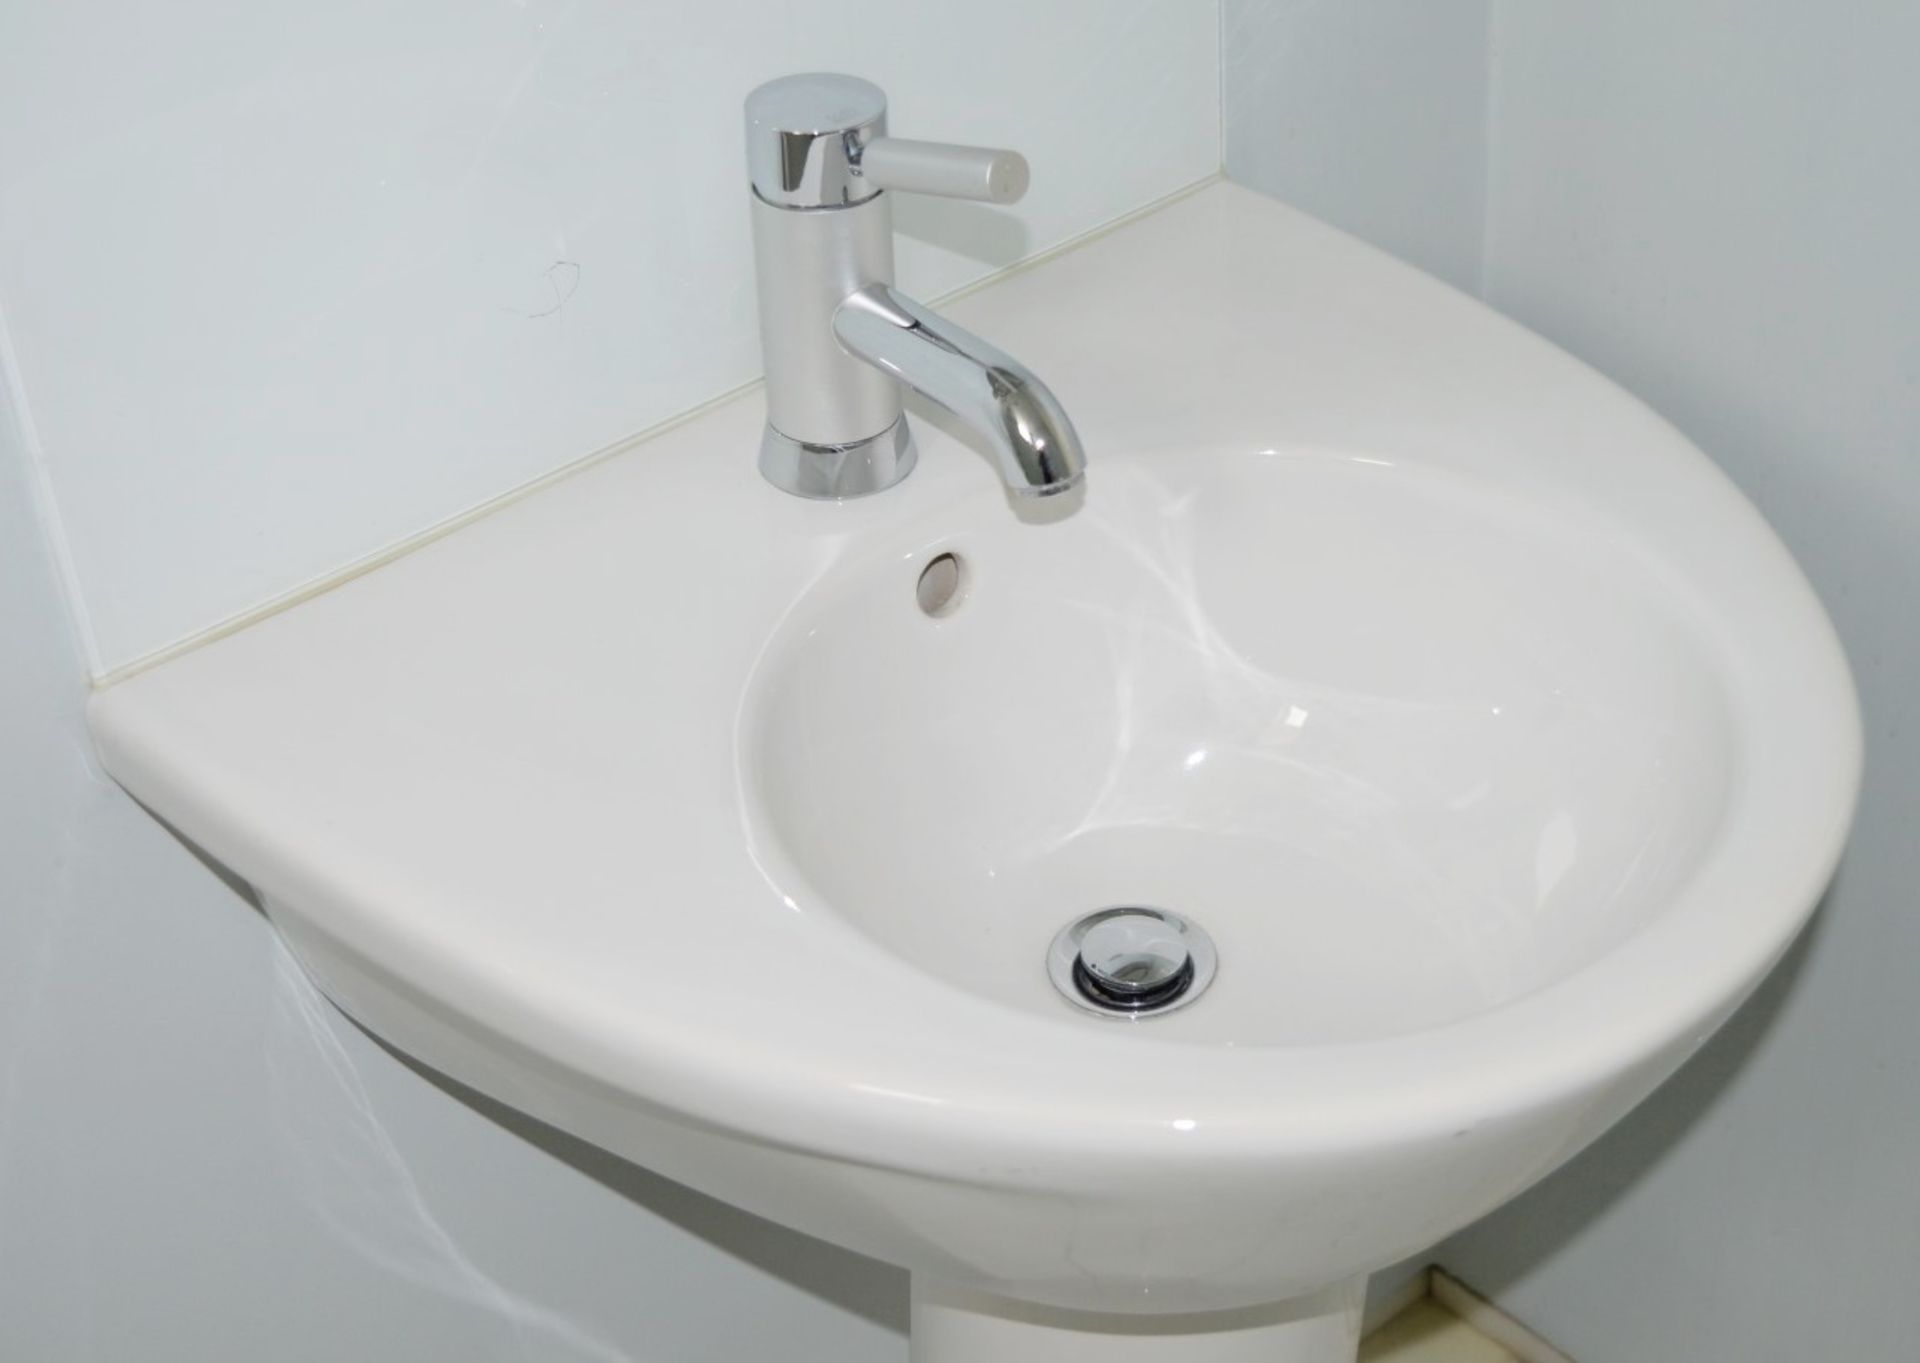 1 x Bathroom Suite Including Duravit Starck Sink Basin, Dorn Bracht Mixer Tap, Duravit Wall Hung - Image 14 of 29